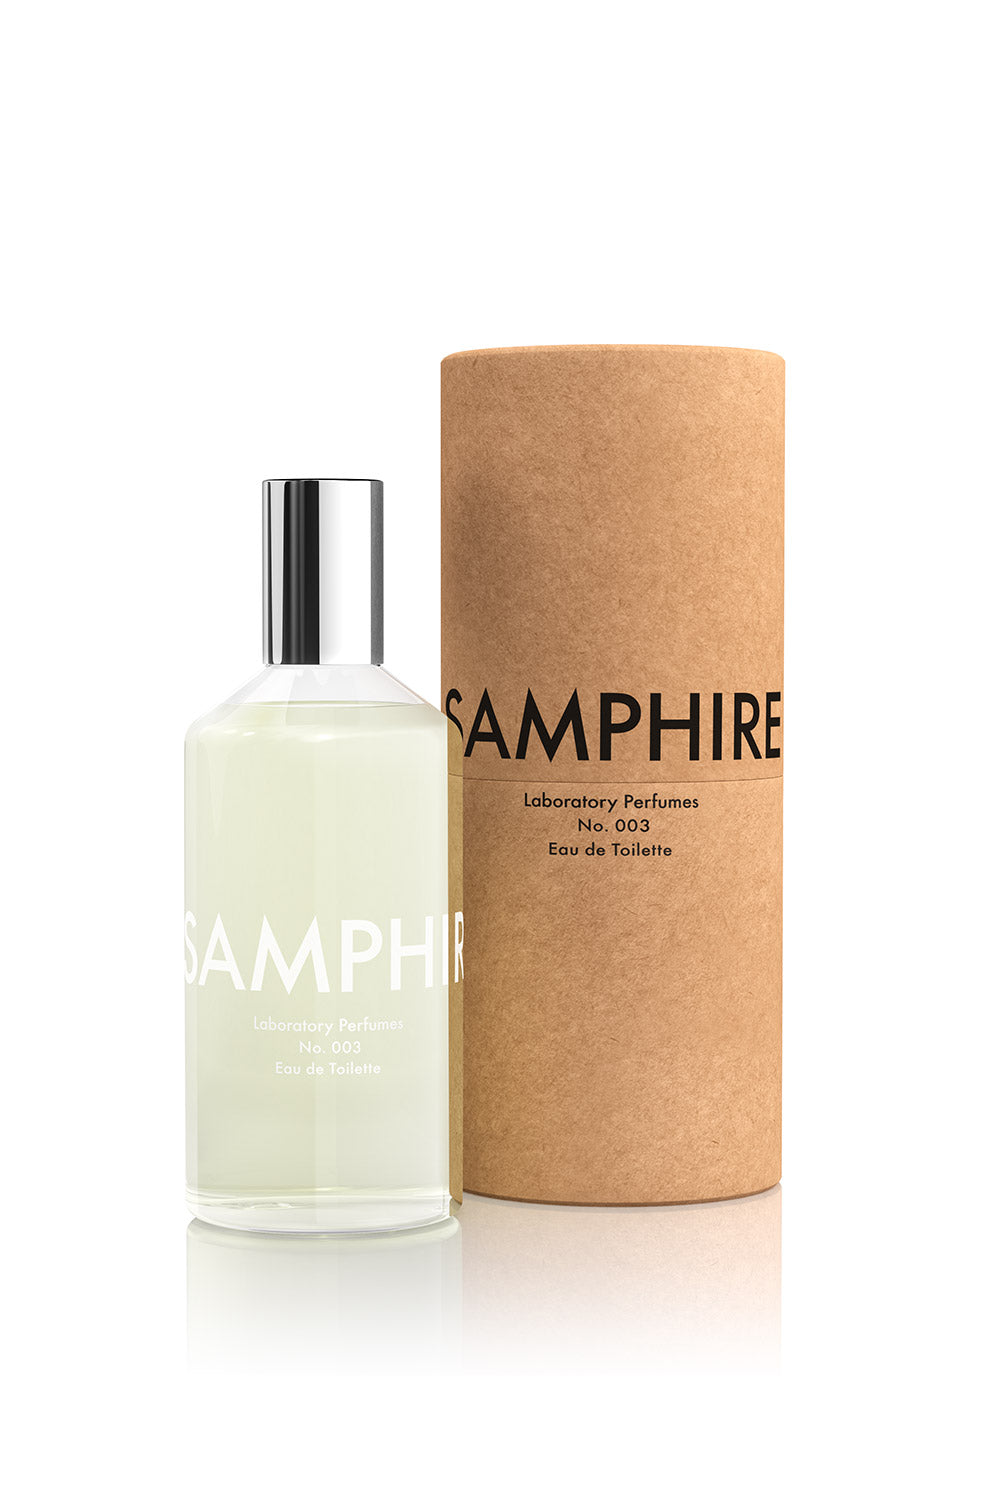 Laboratory Perfumes Samphire Eau de Toilette